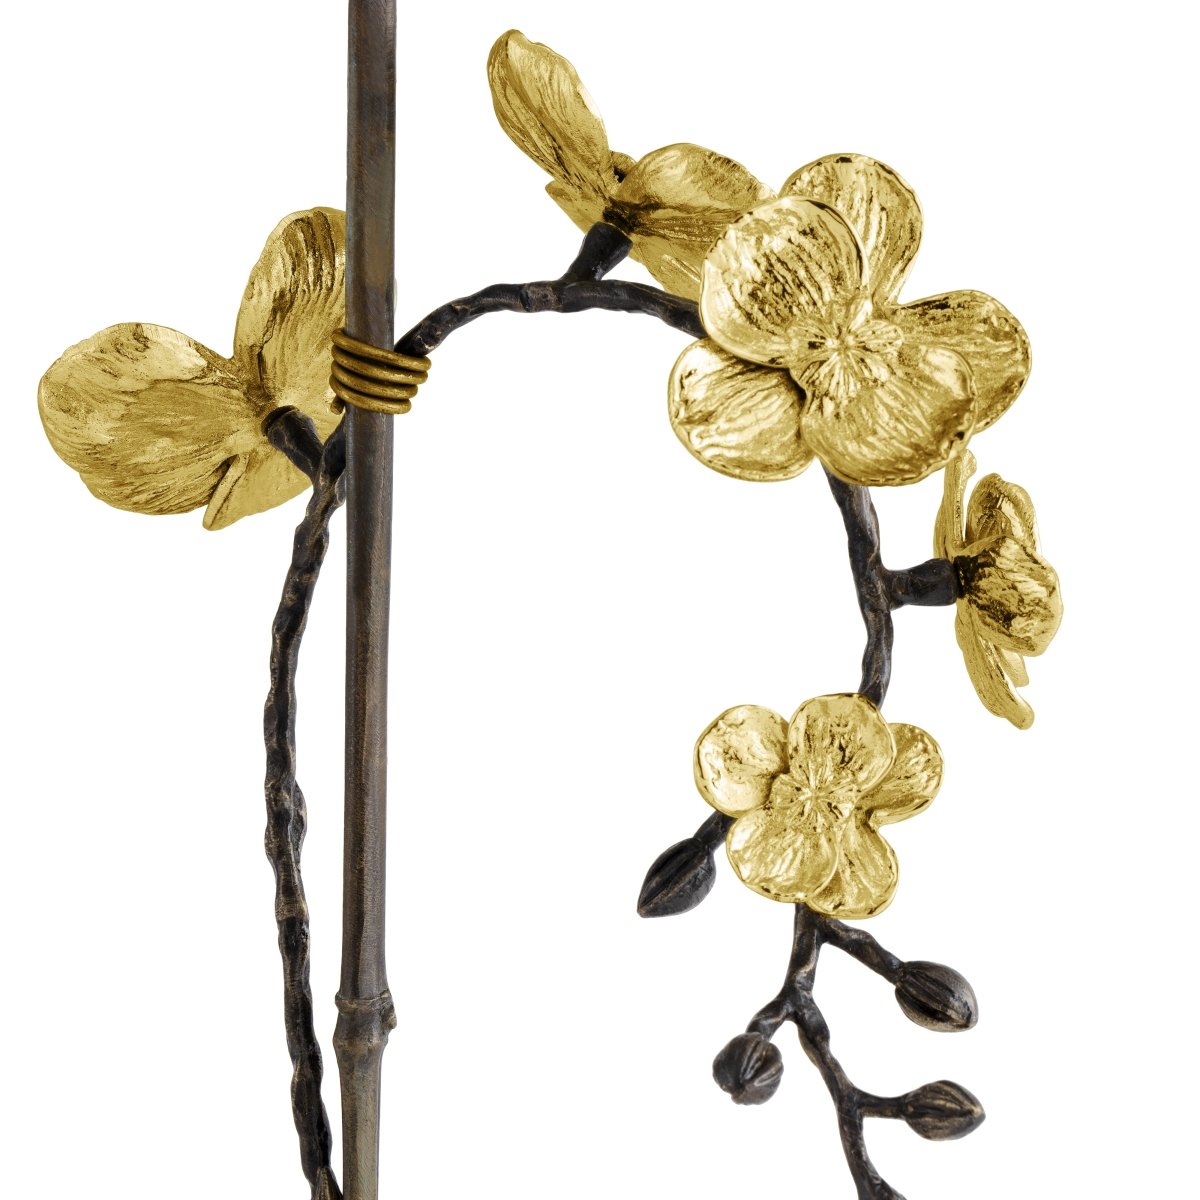 Michael Aram Gold Orchid Stem Sculpture